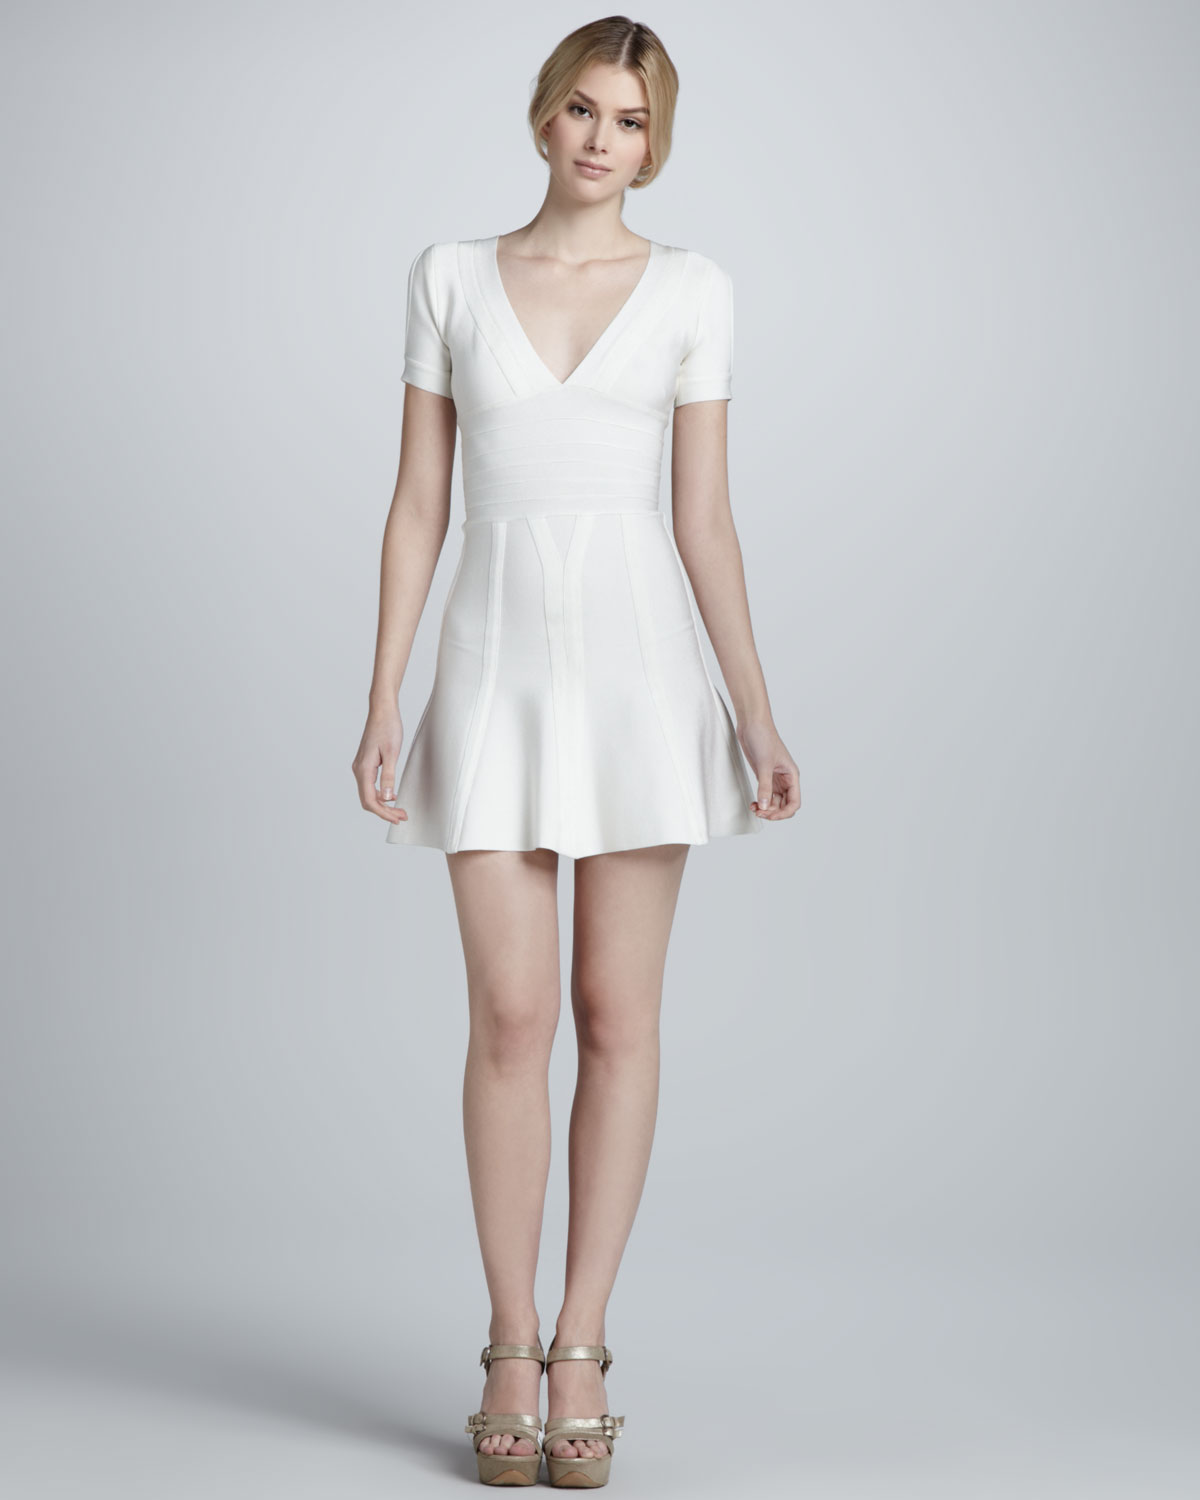 herve leger white dress